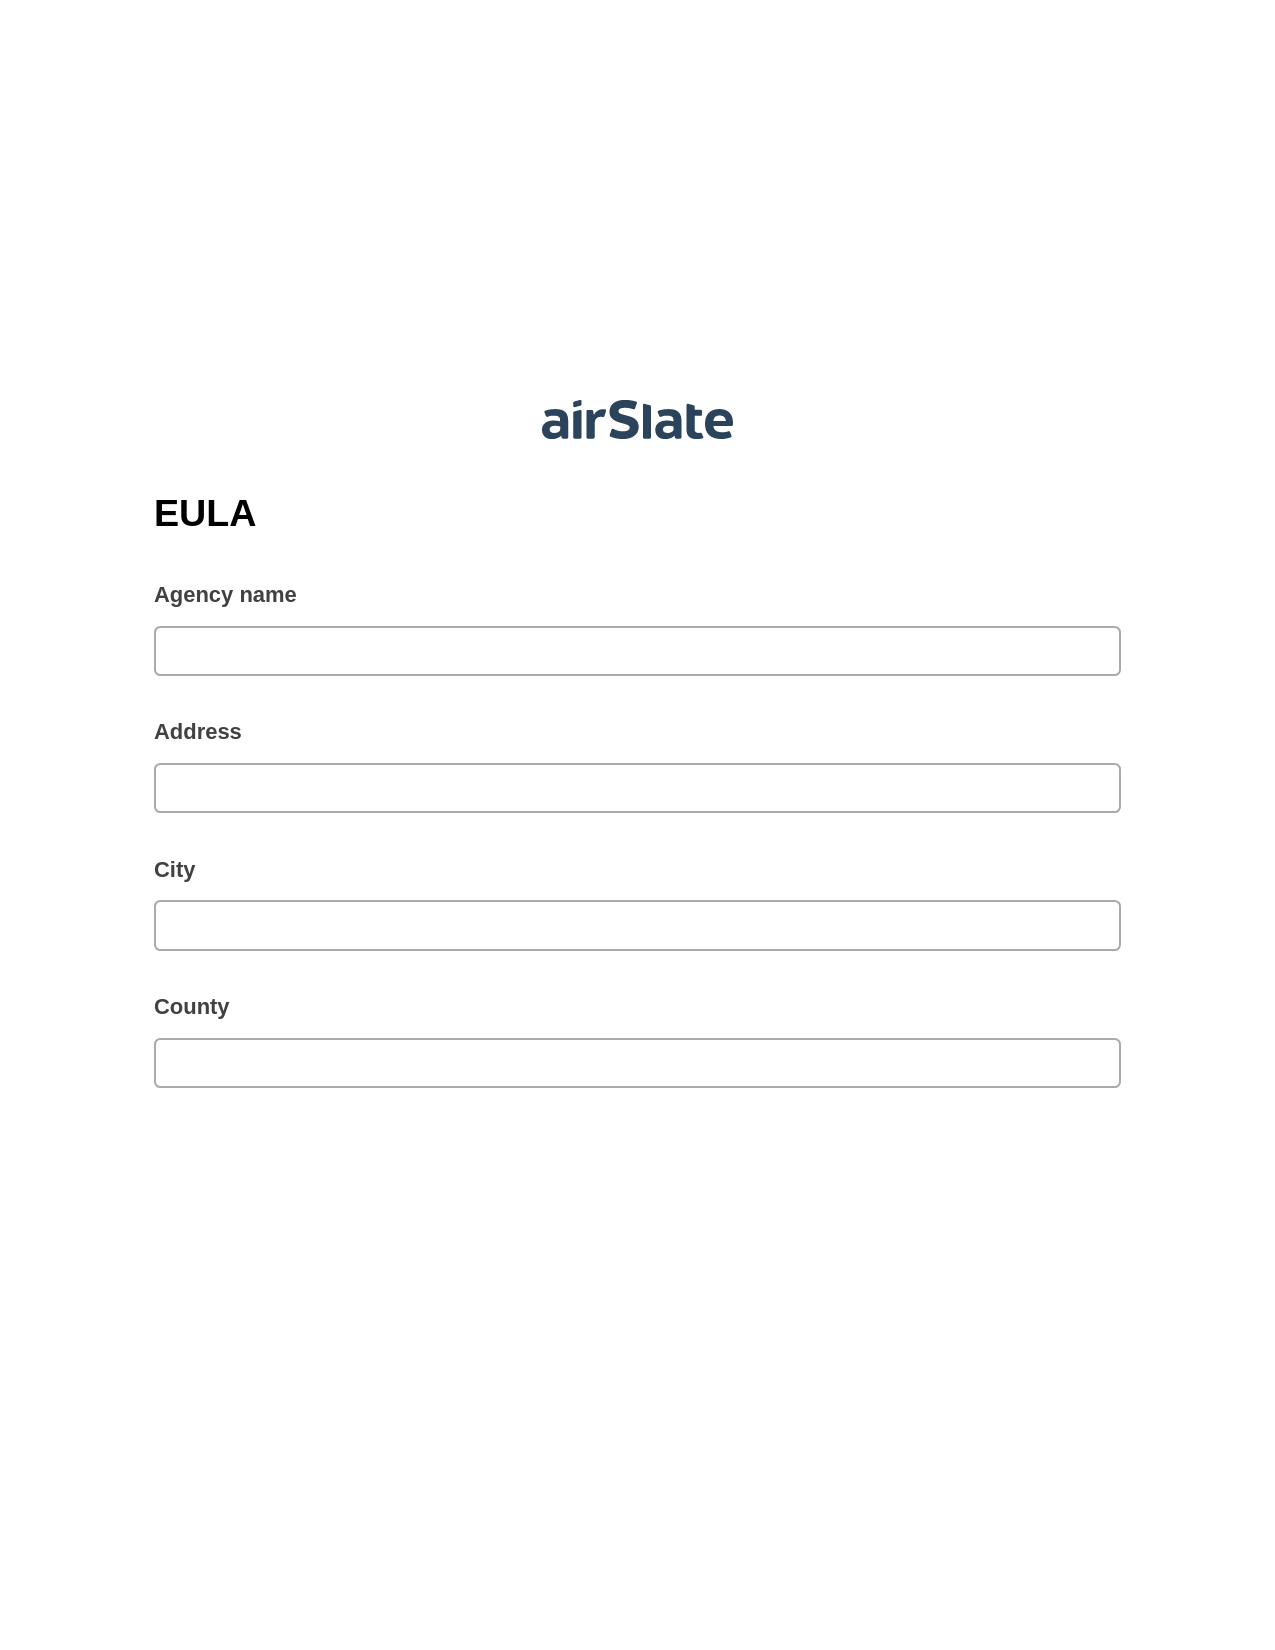 EULA Pre-fill from Excel Spreadsheet Dropdown Options Bot, Revoke Access Bot, Box Bot